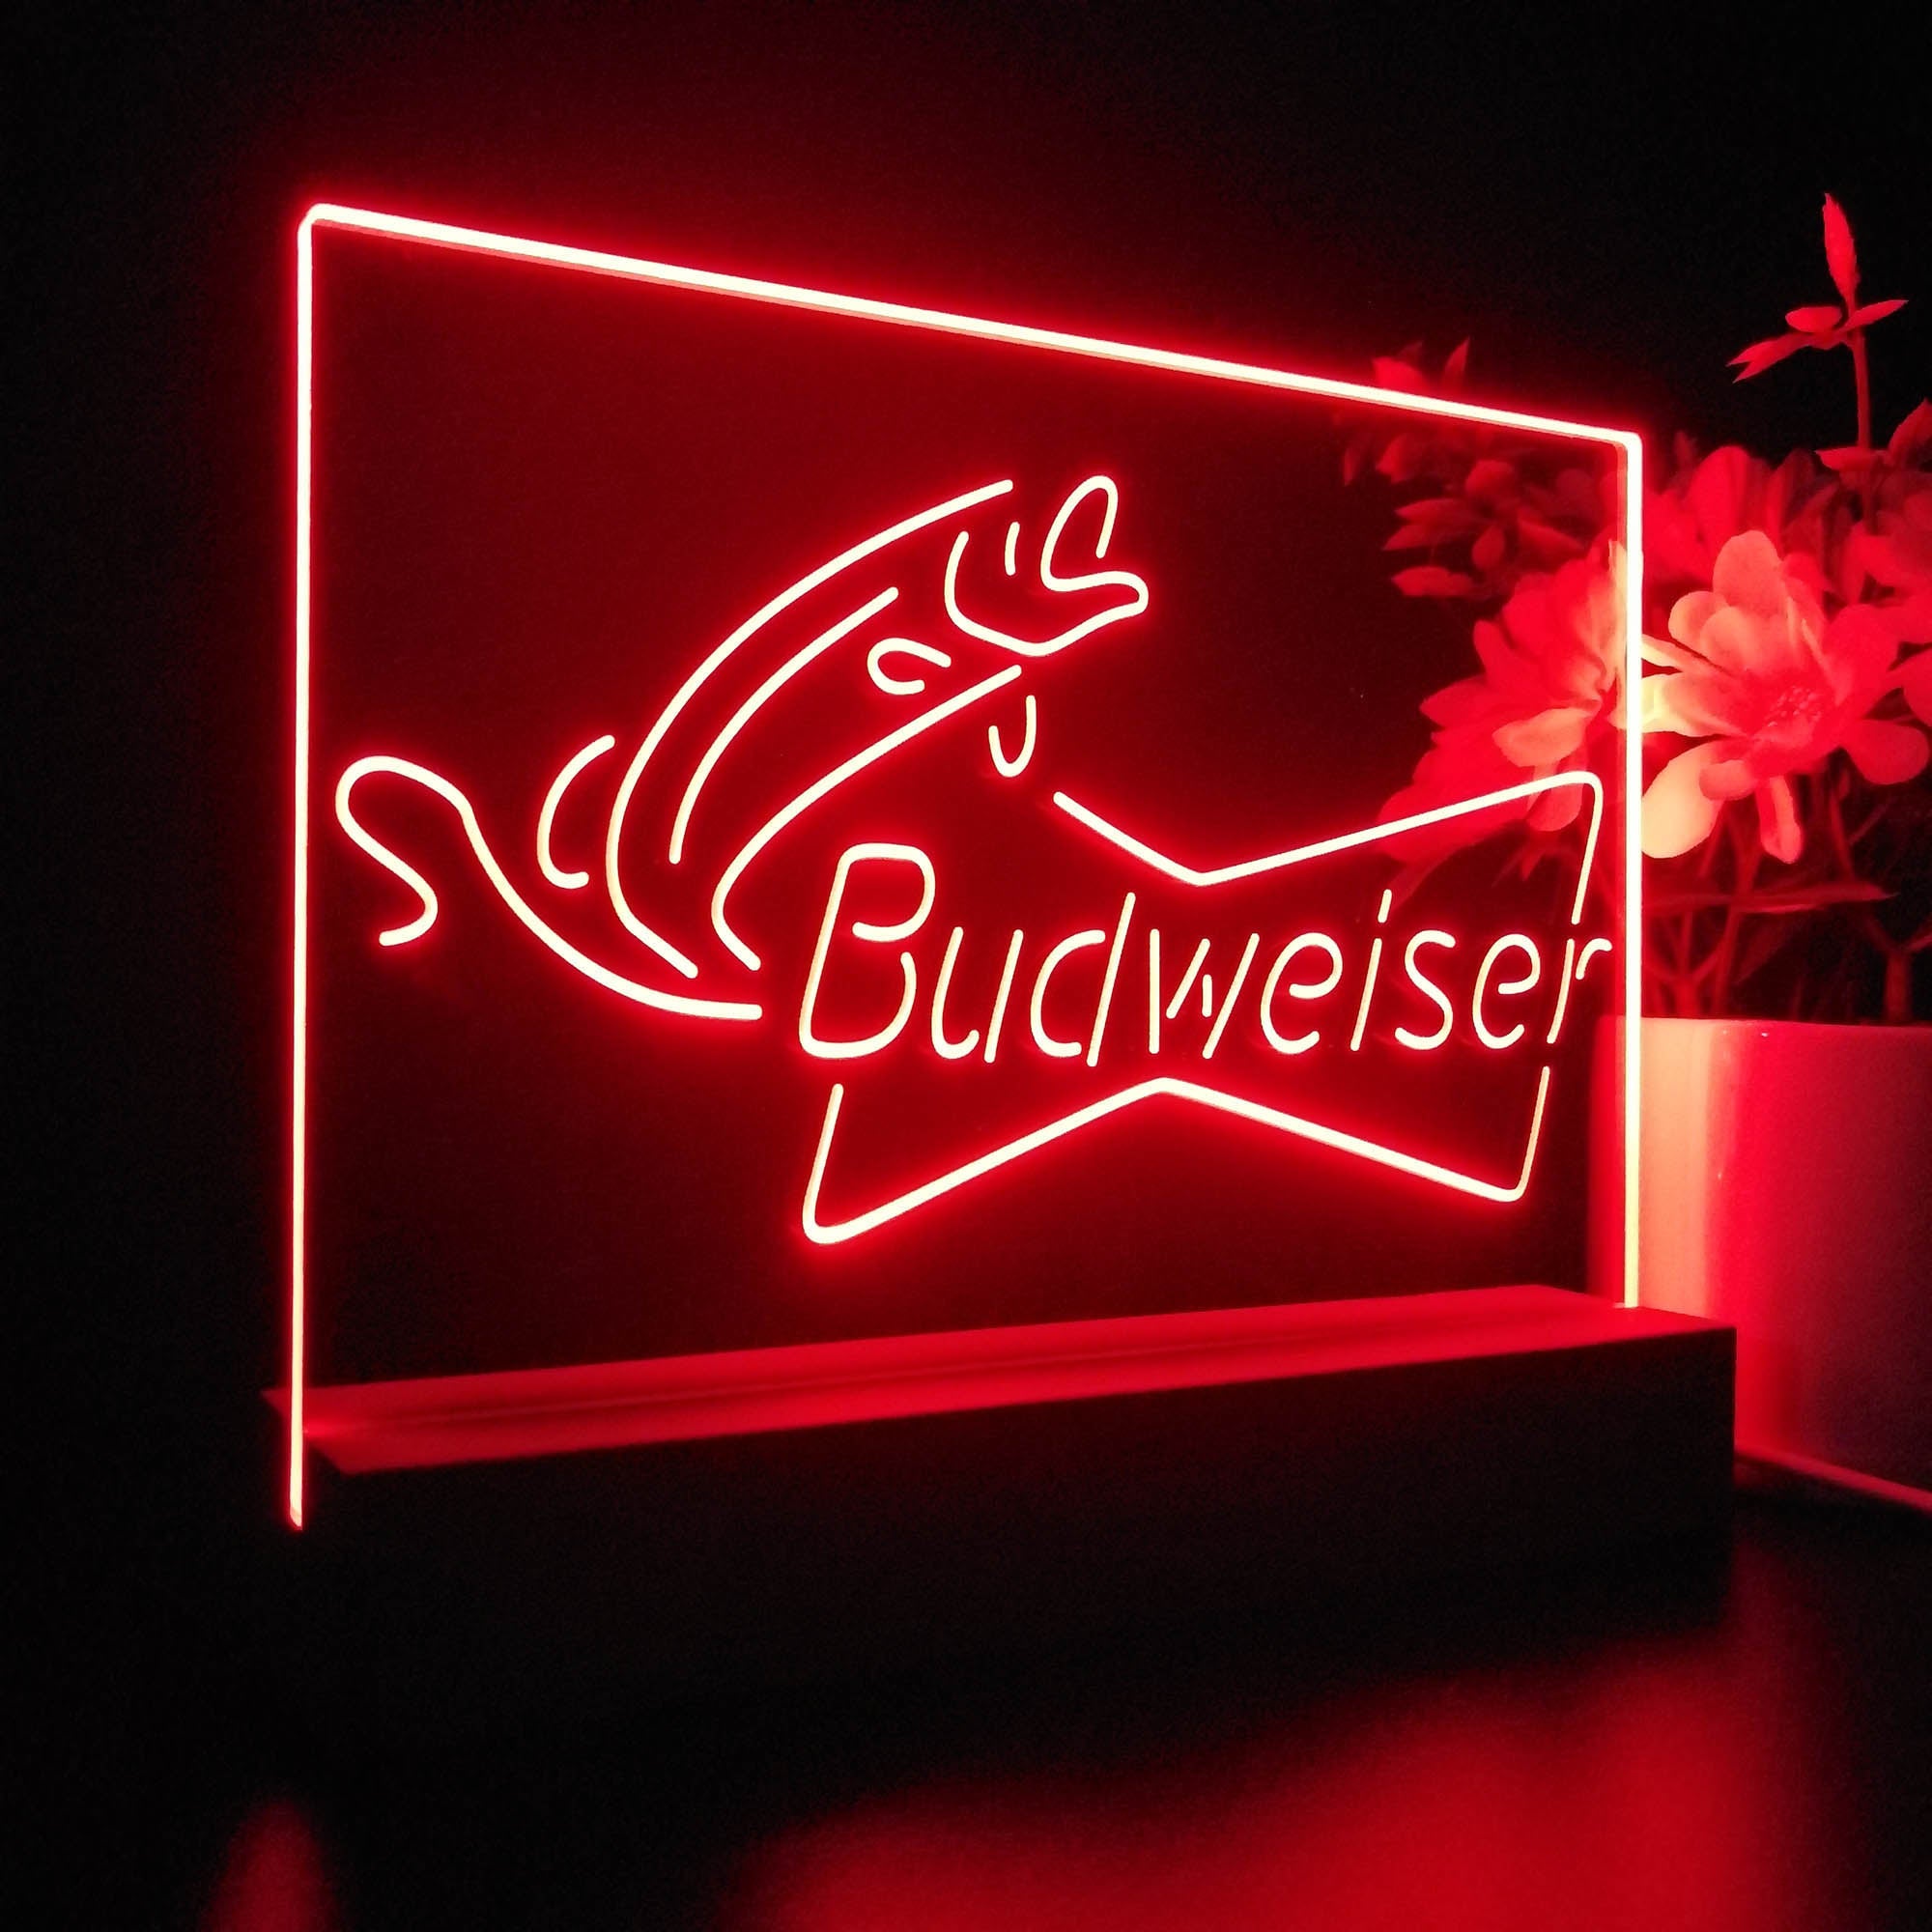 Budweiser Bow Tie Fishing Night Light LED Sign